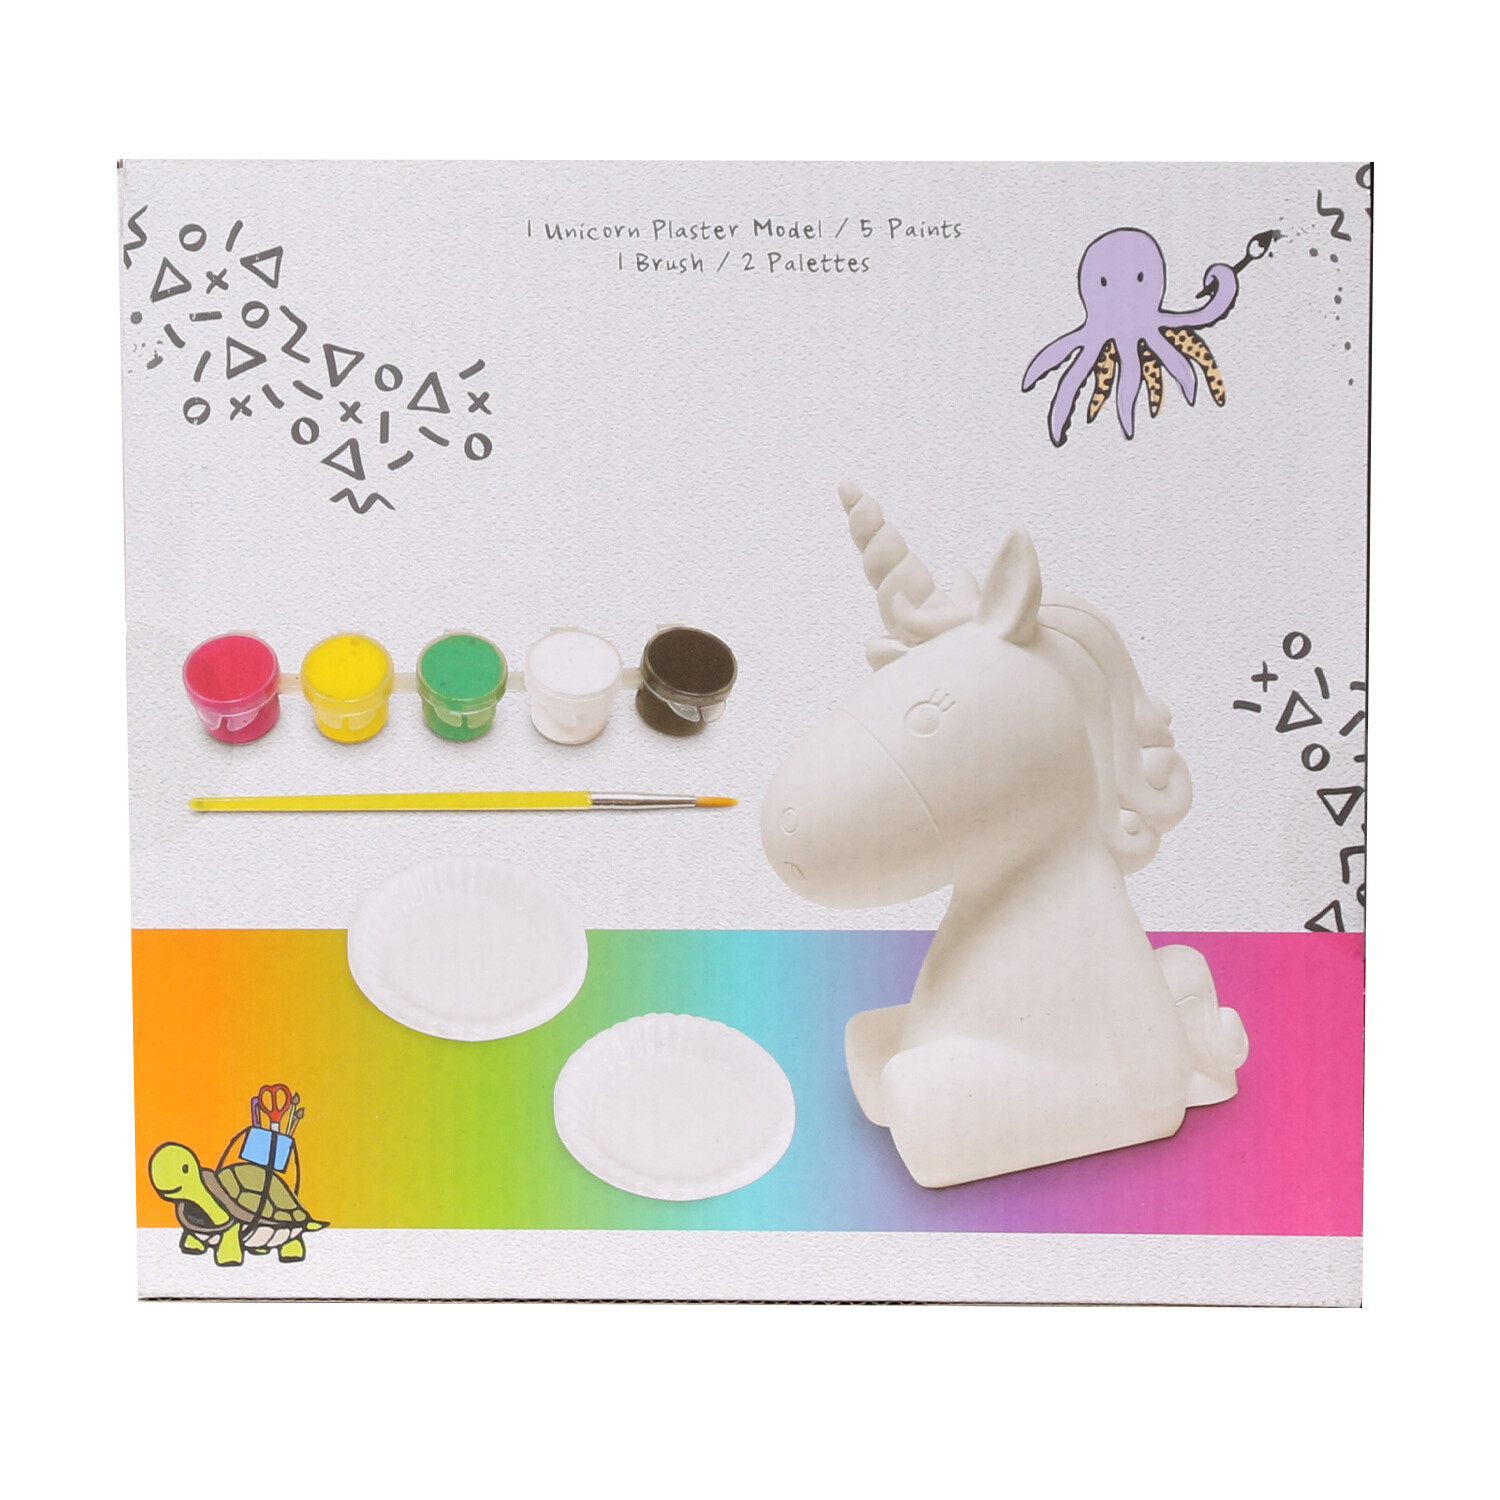 Paint Your Own Plaster Model  - Unicorn Image 2